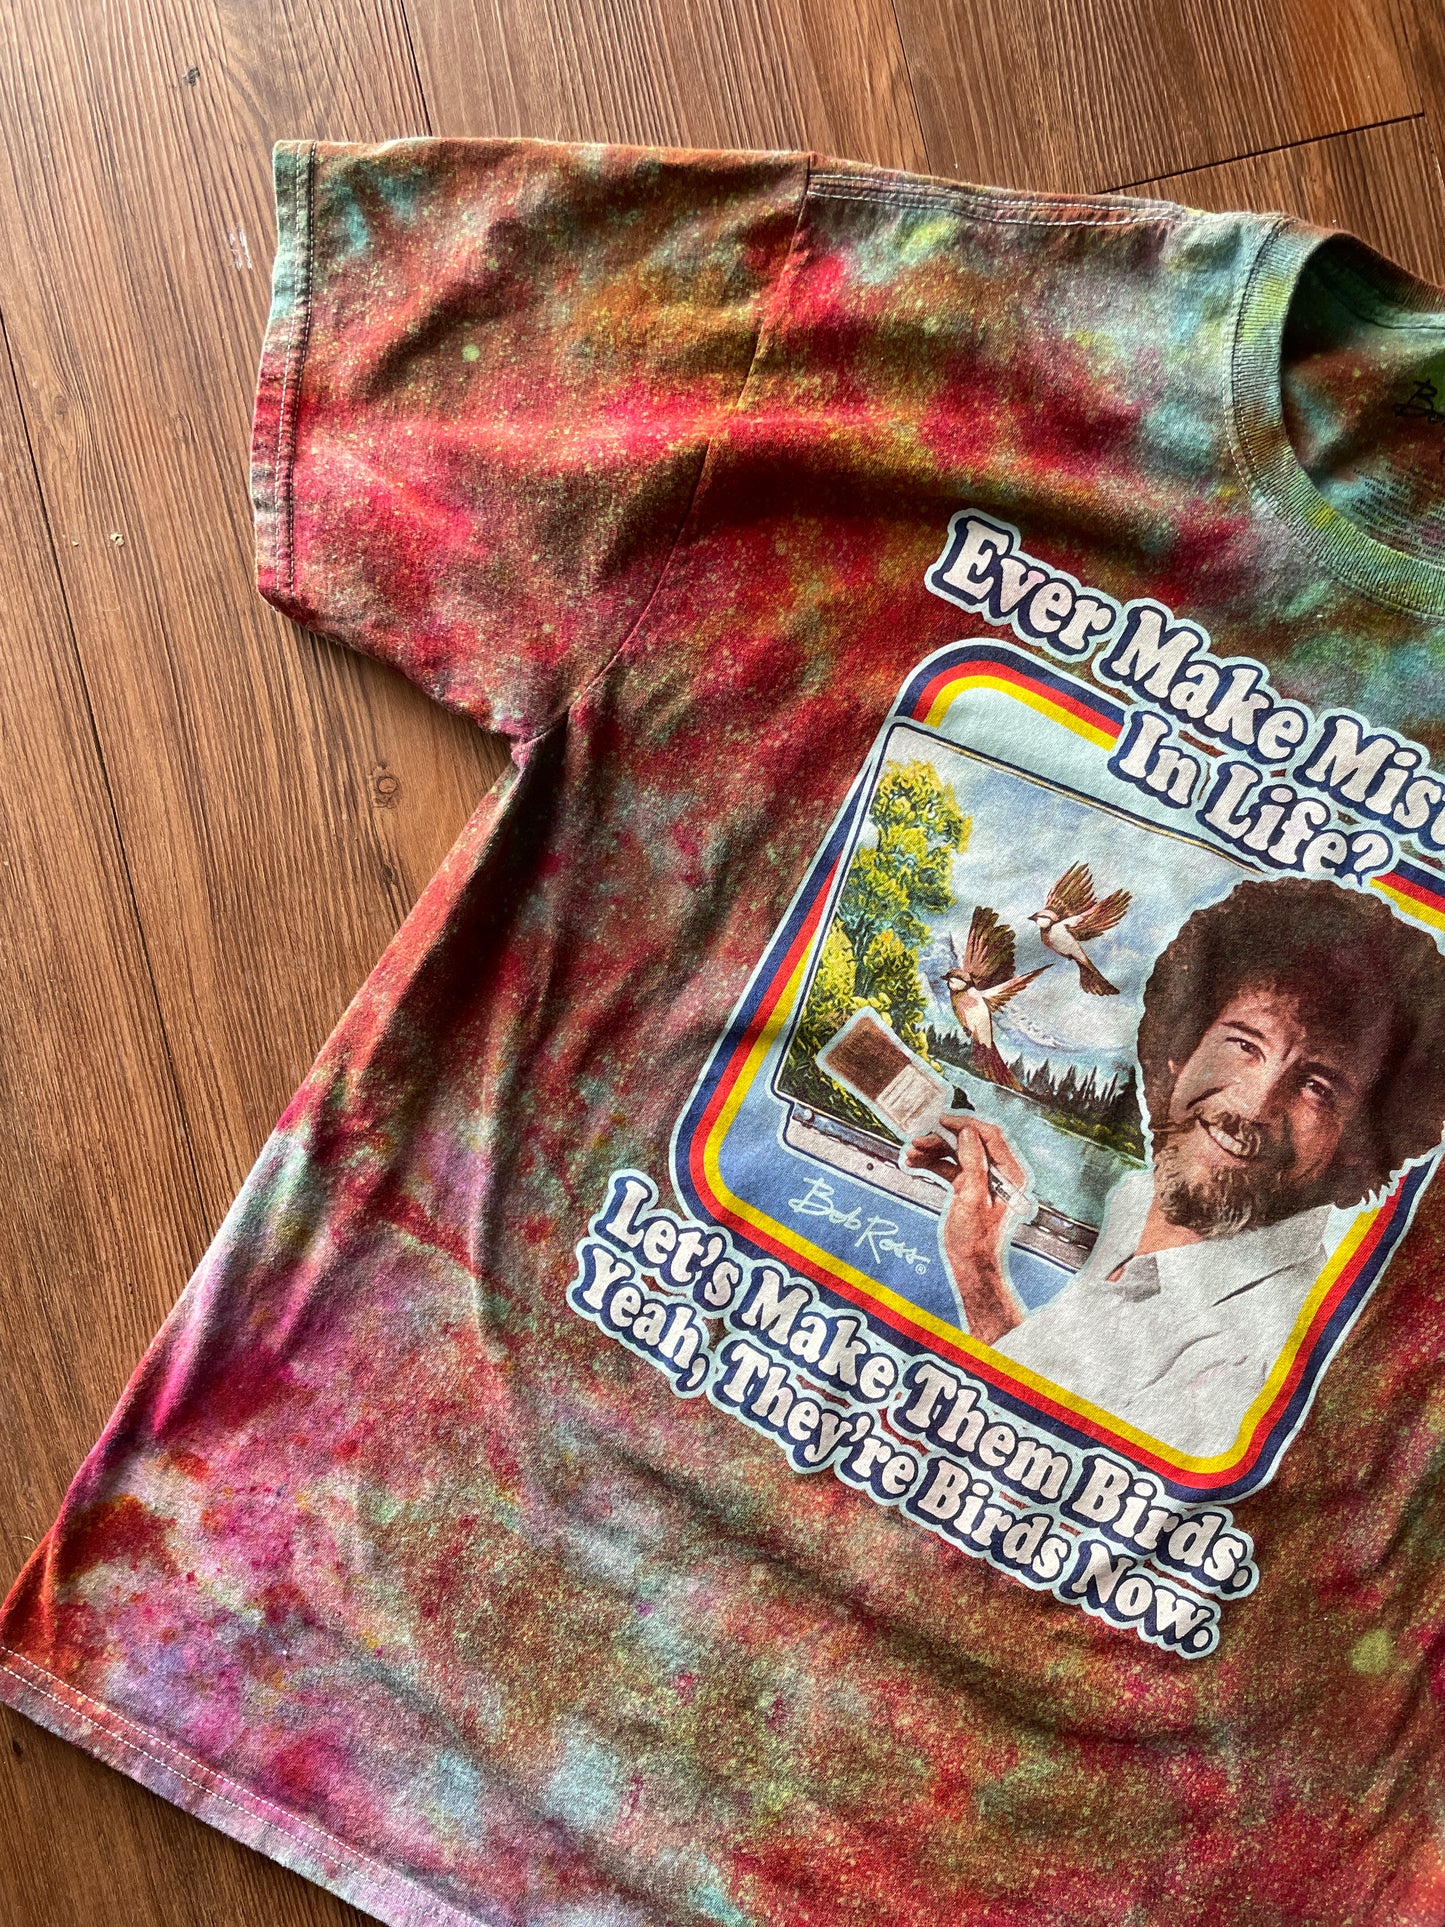 LARGE Men’s Bob Ross Mistakes Galaxy Handmade Tie Dye T-Shirt | One-Of-a-Kind Rainbow Snow Dyed Short Sleeve